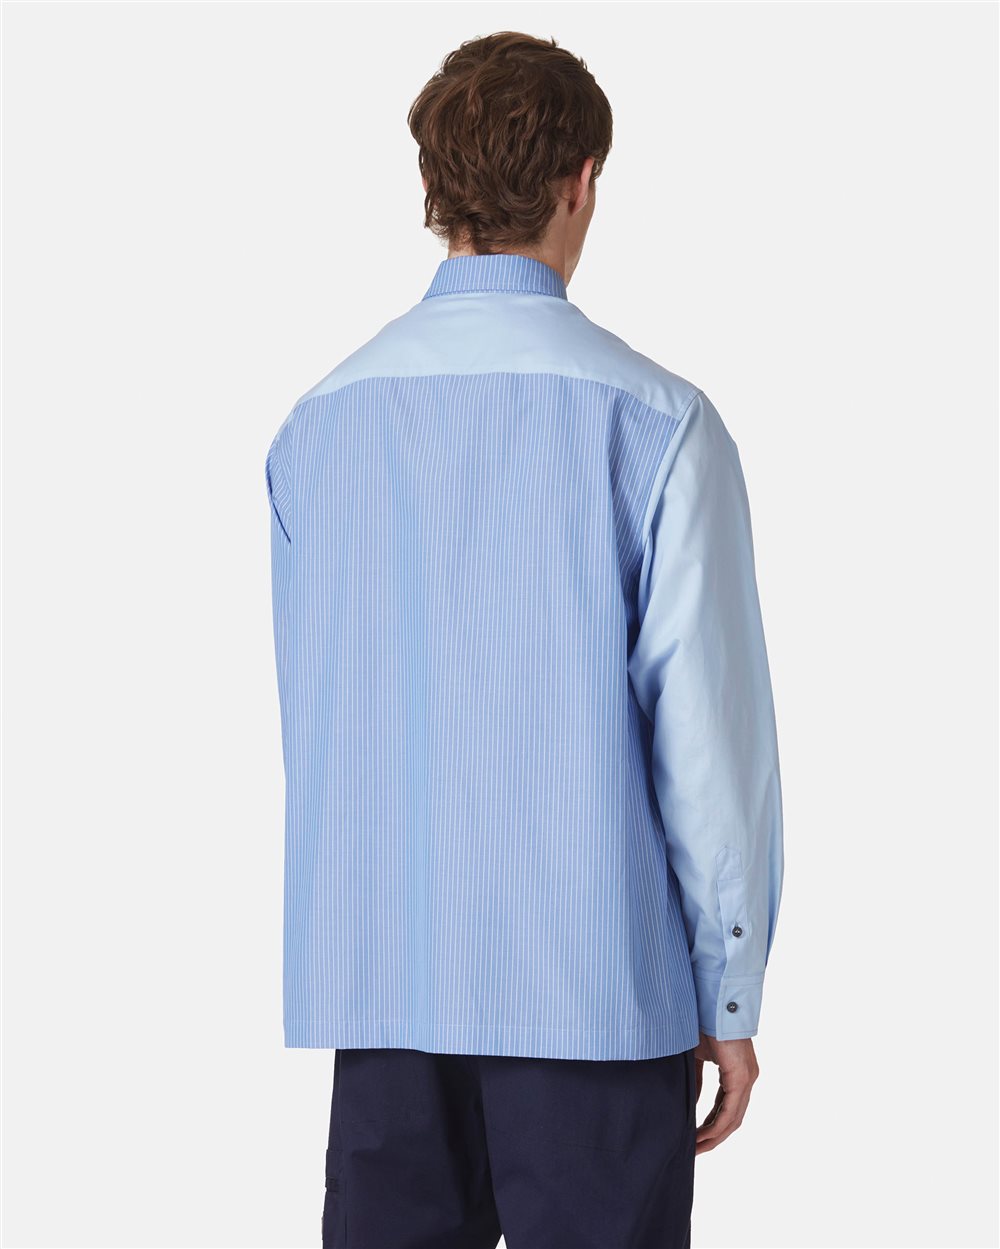 Light blue shirt with logo - Iceberg - Official Website